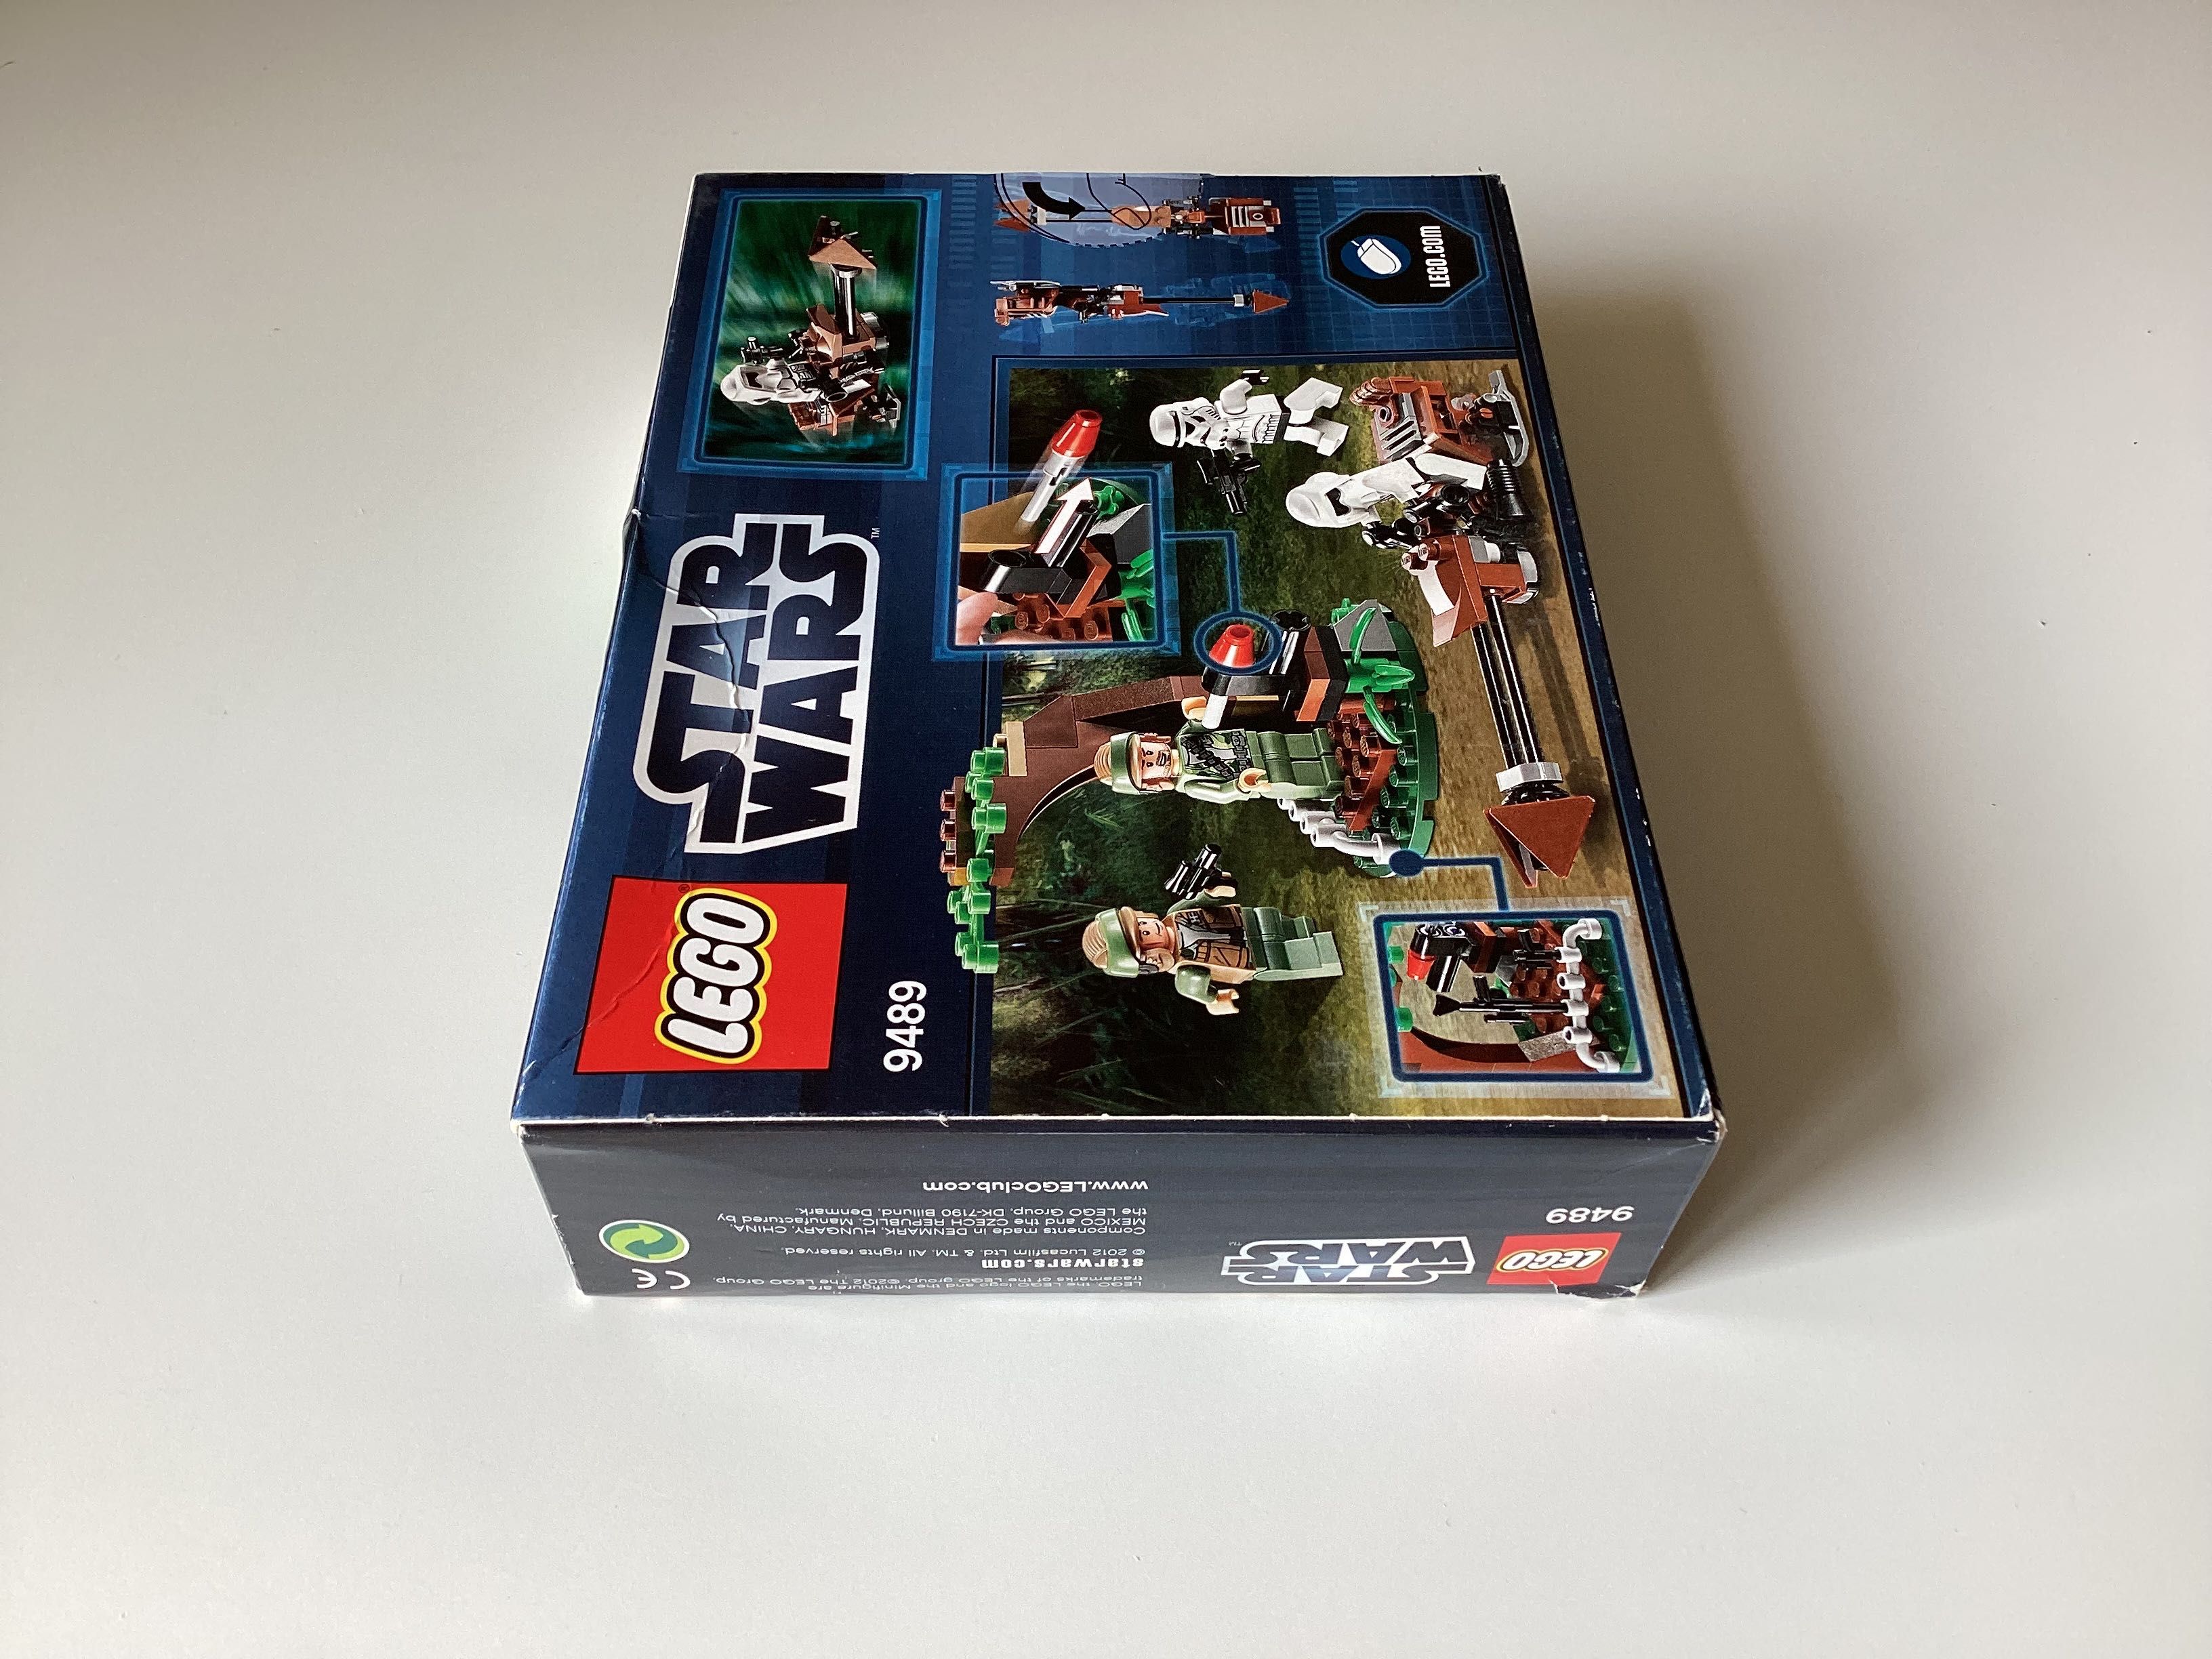 LEGO STAR WARS 9489 Endor Rebel Trooper & Imperial Trooper Battle NOWE